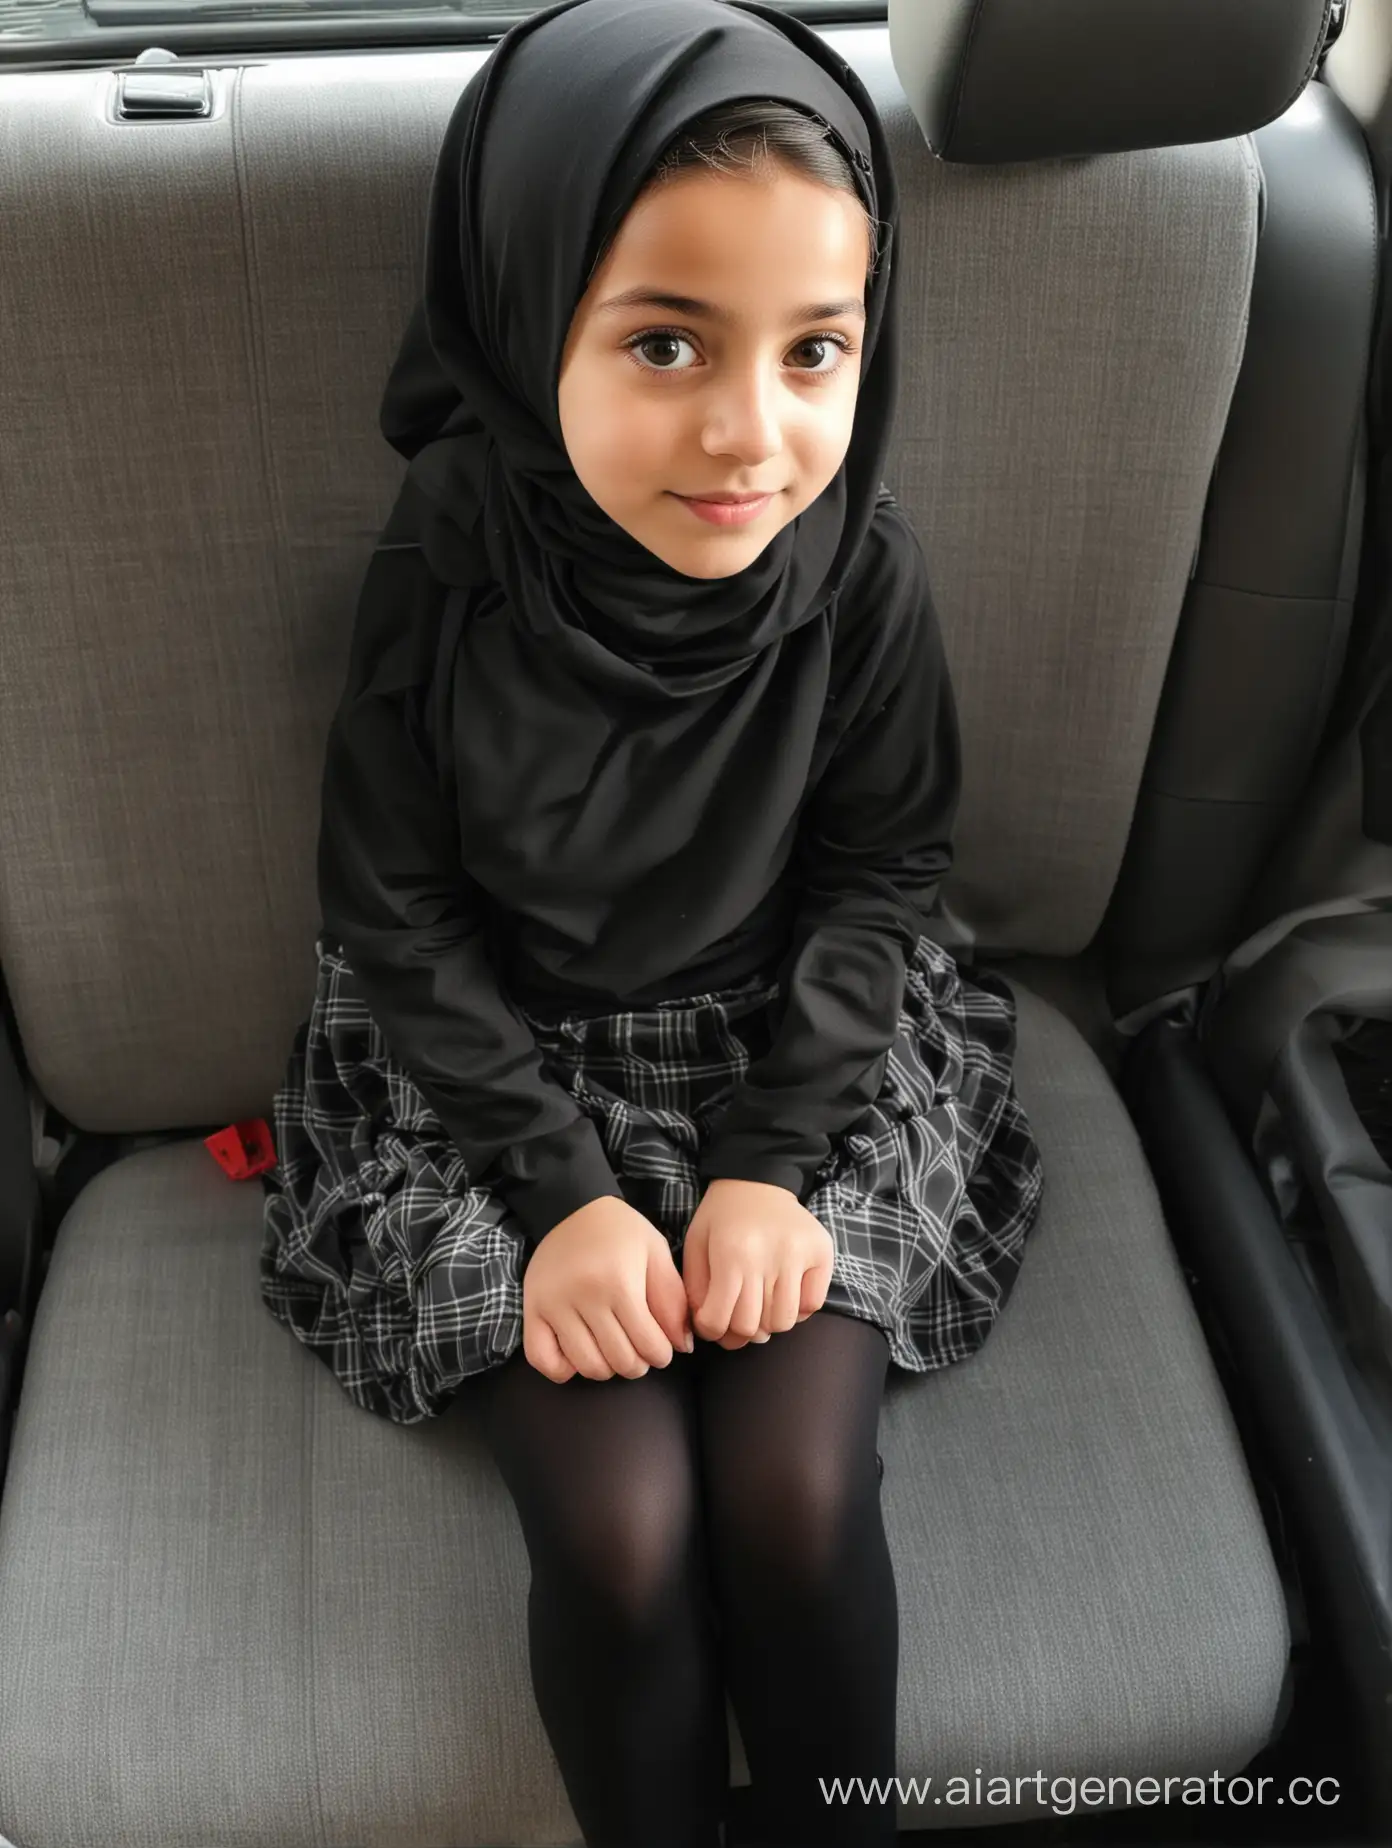 Young-Girl-in-Hijab-Sitting-in-Car-Seat